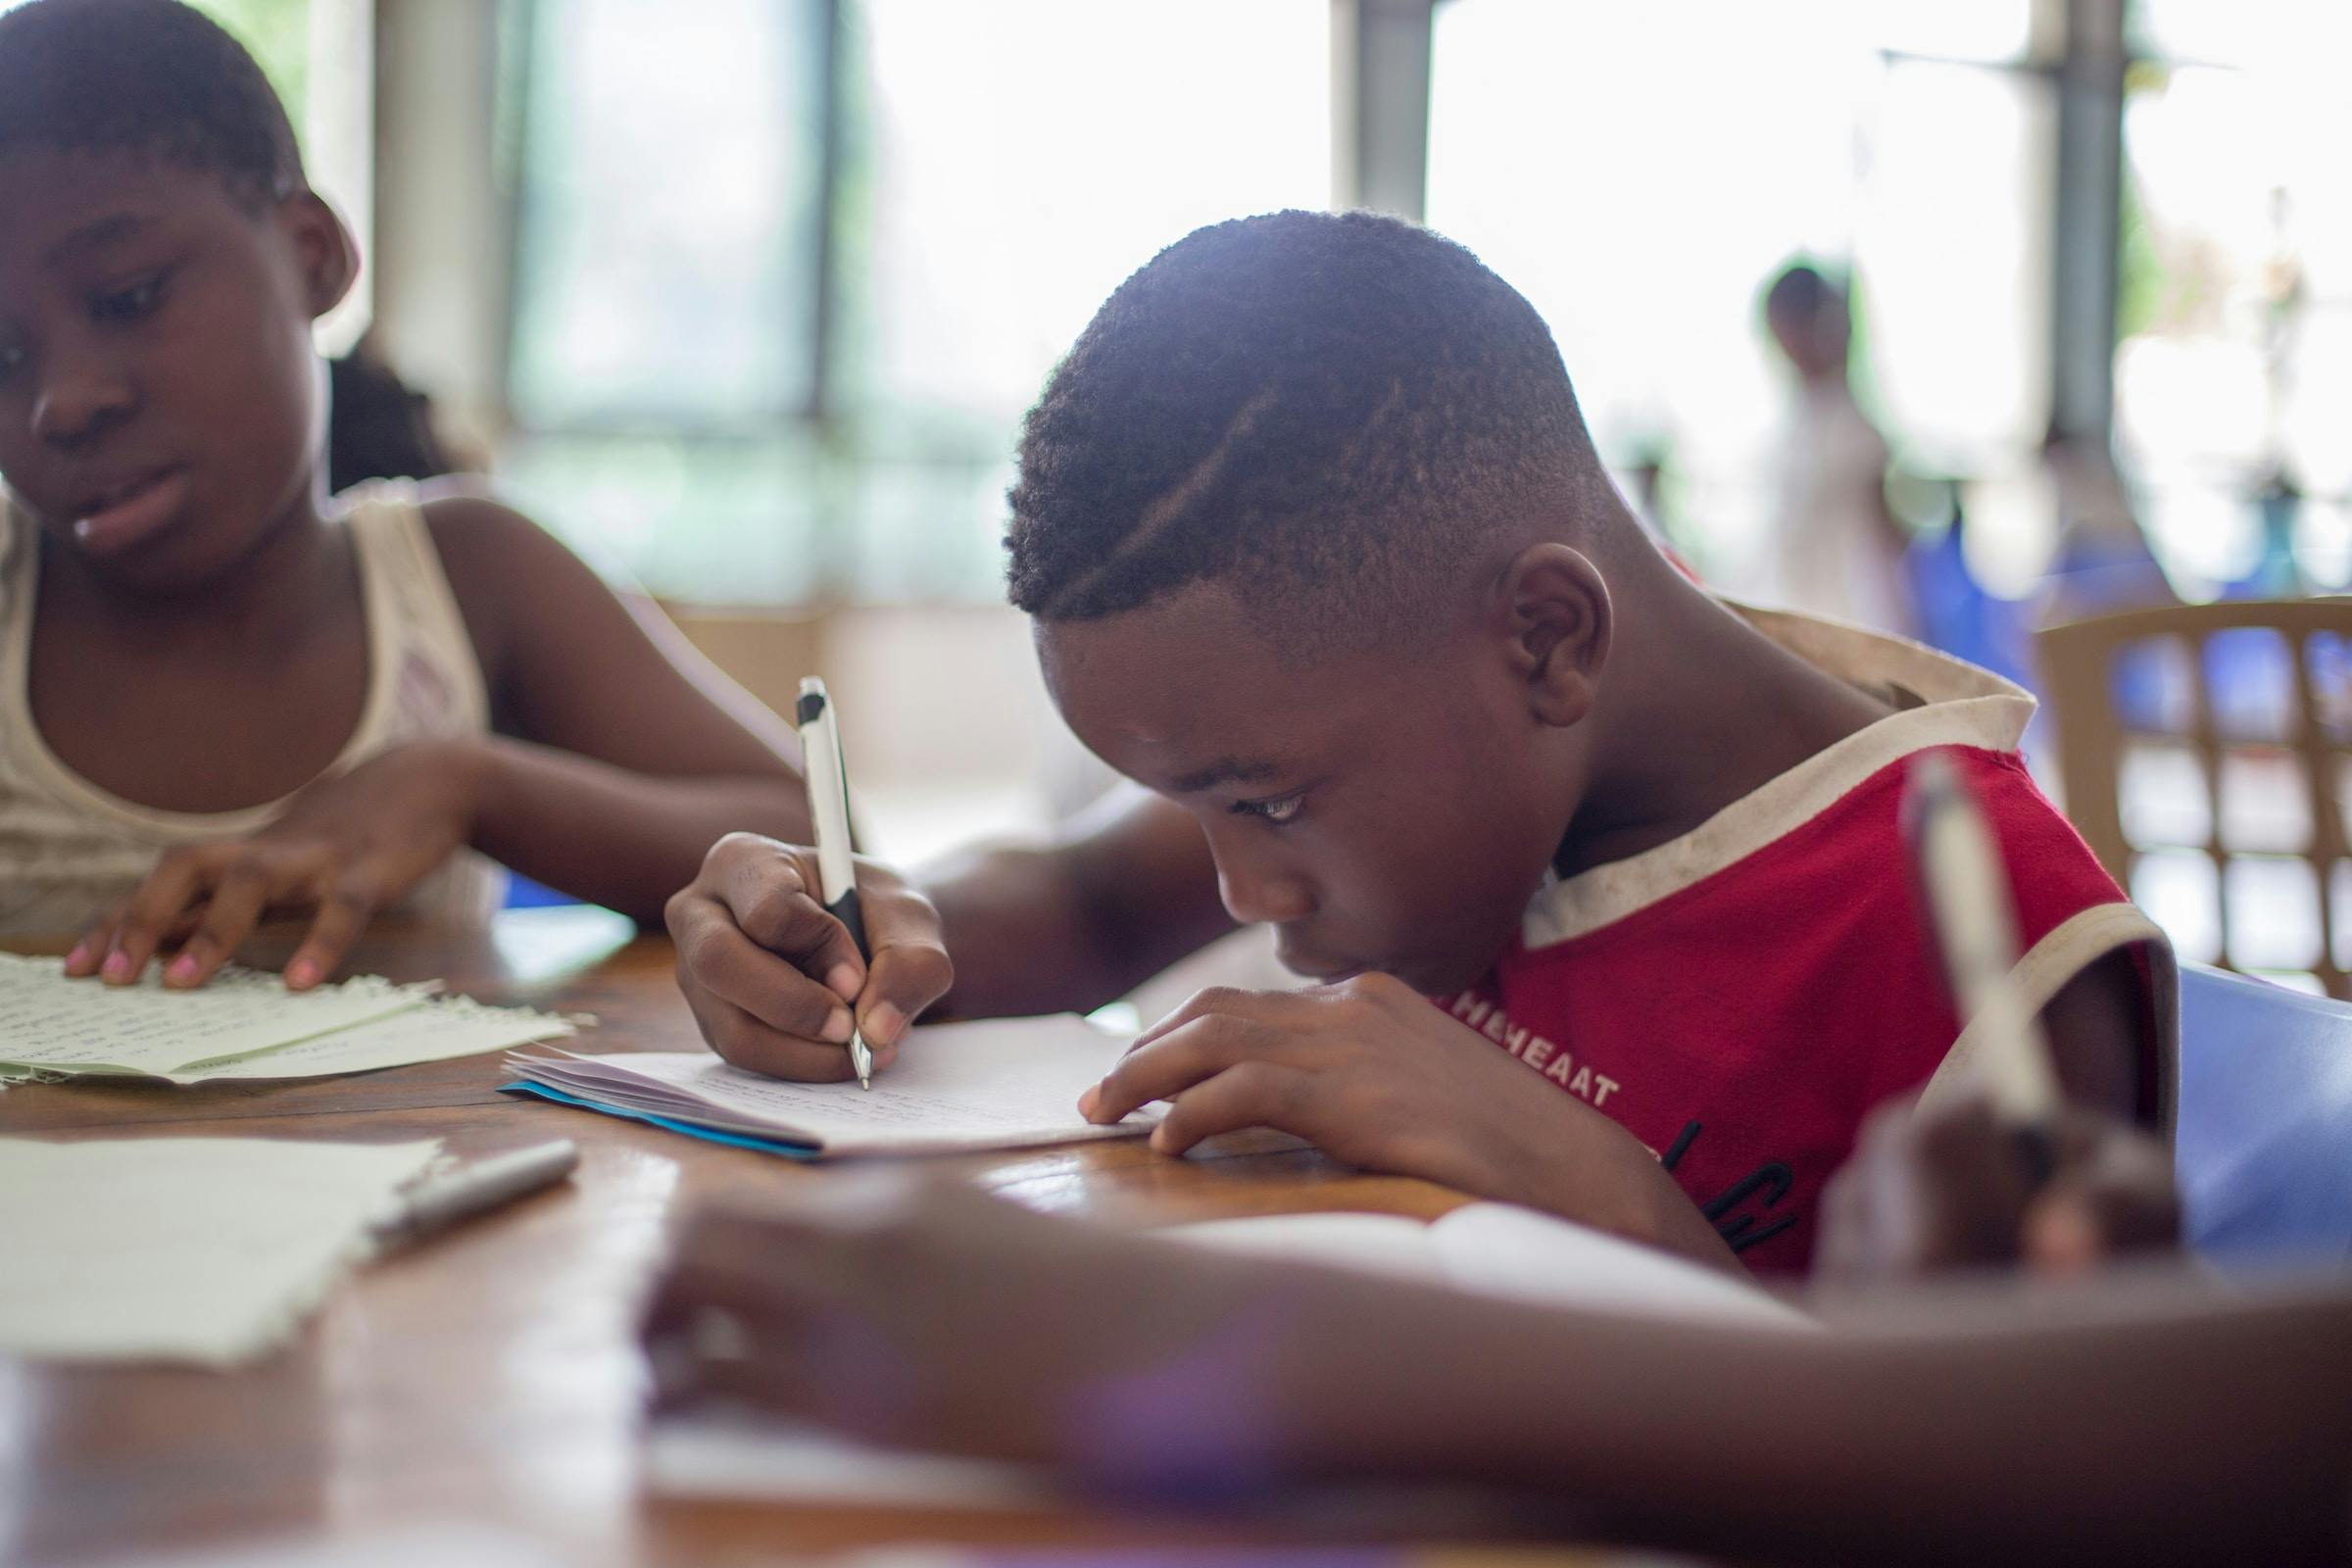 Boy writing on paper near girl in a school-like setting.